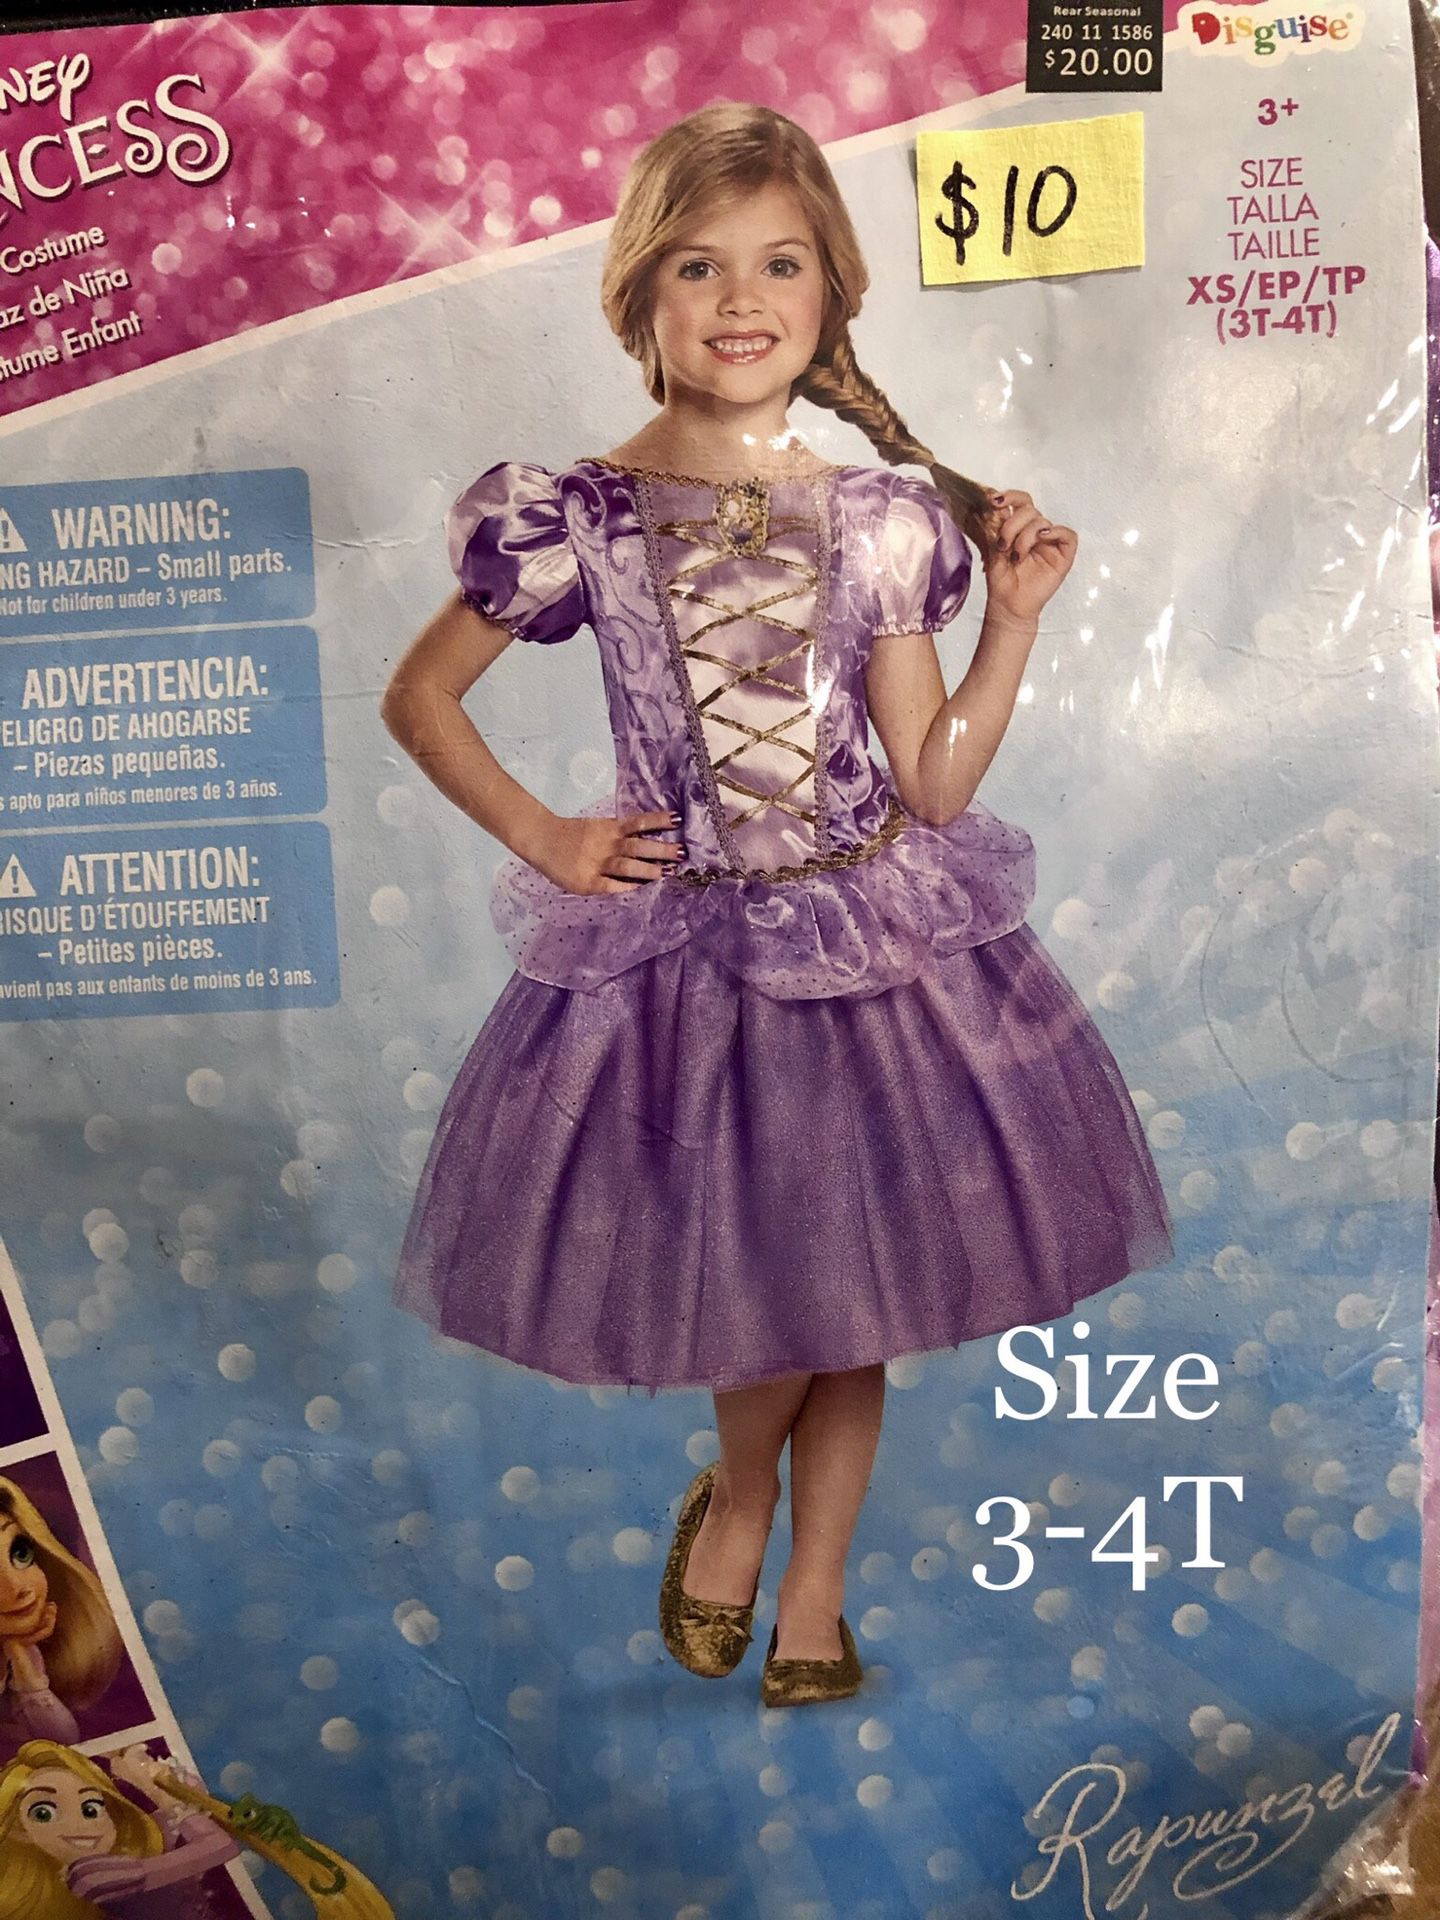 NEW Rapunzel Halloween Costume size 3-4T